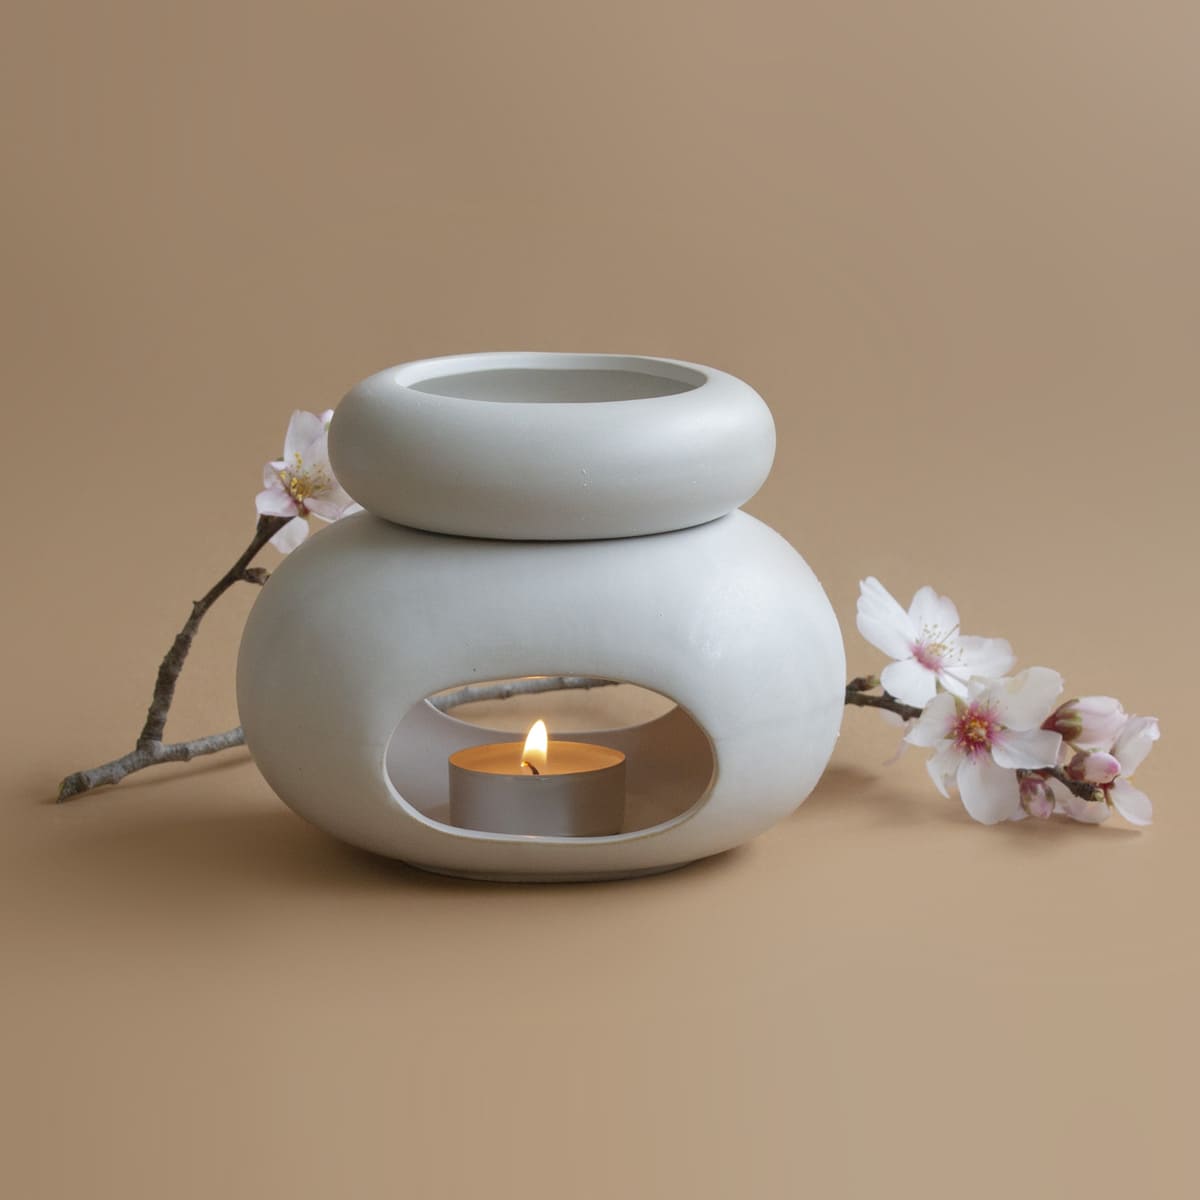 Comprar Quemador Decorativo Zen Ceramica Blanca SYS Aromas